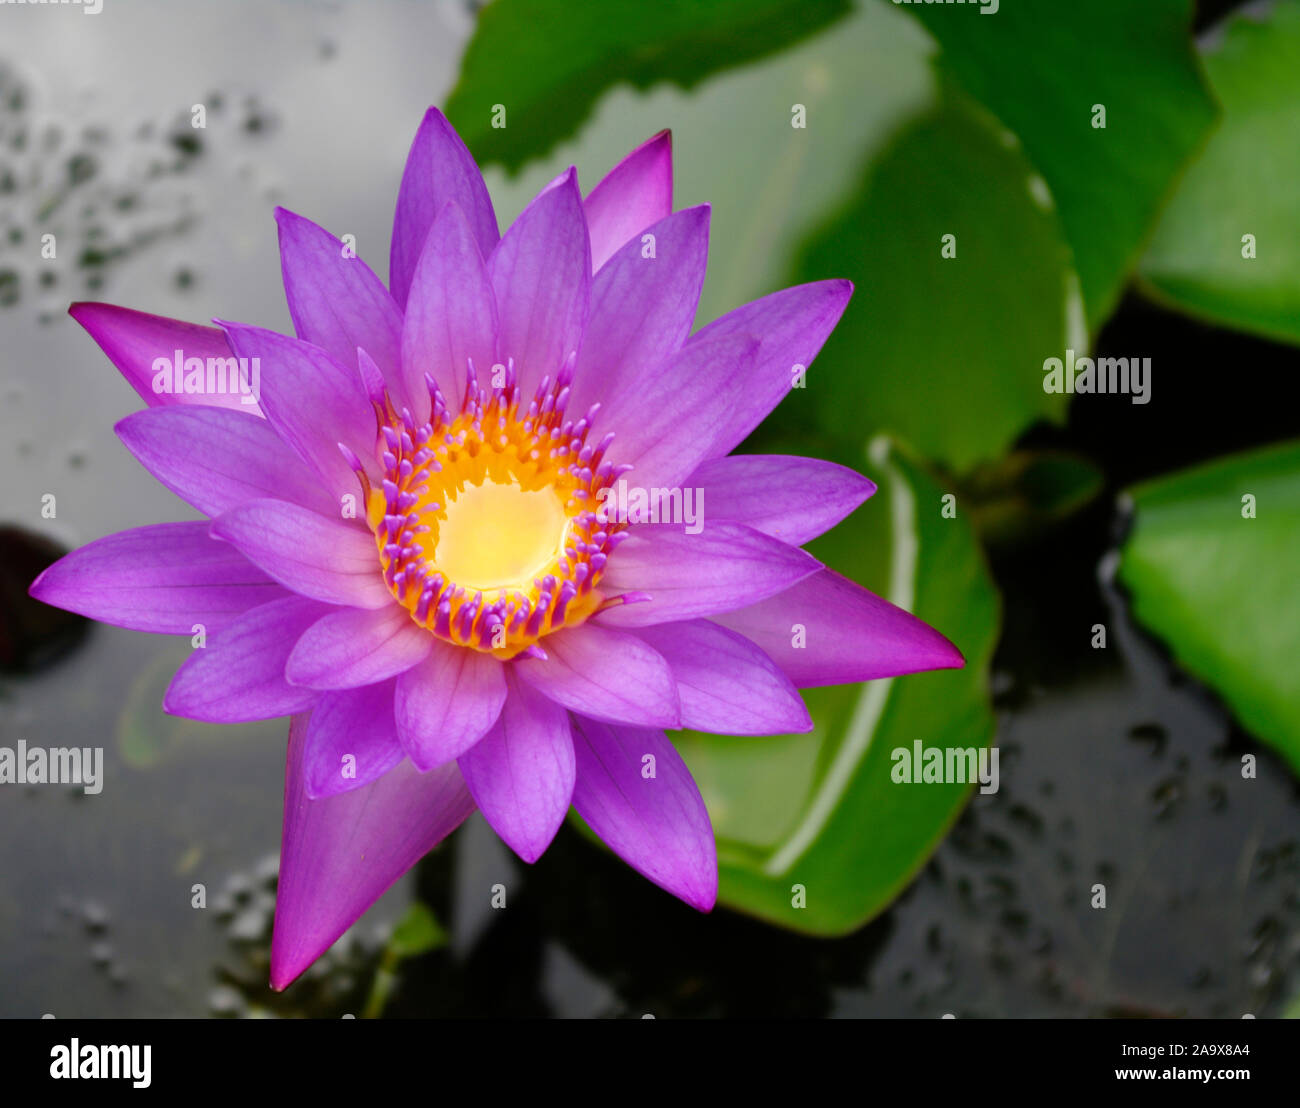 Nahaufnahme einer lila Stern-Seerose / Nymphaea nouchali Stock Photo